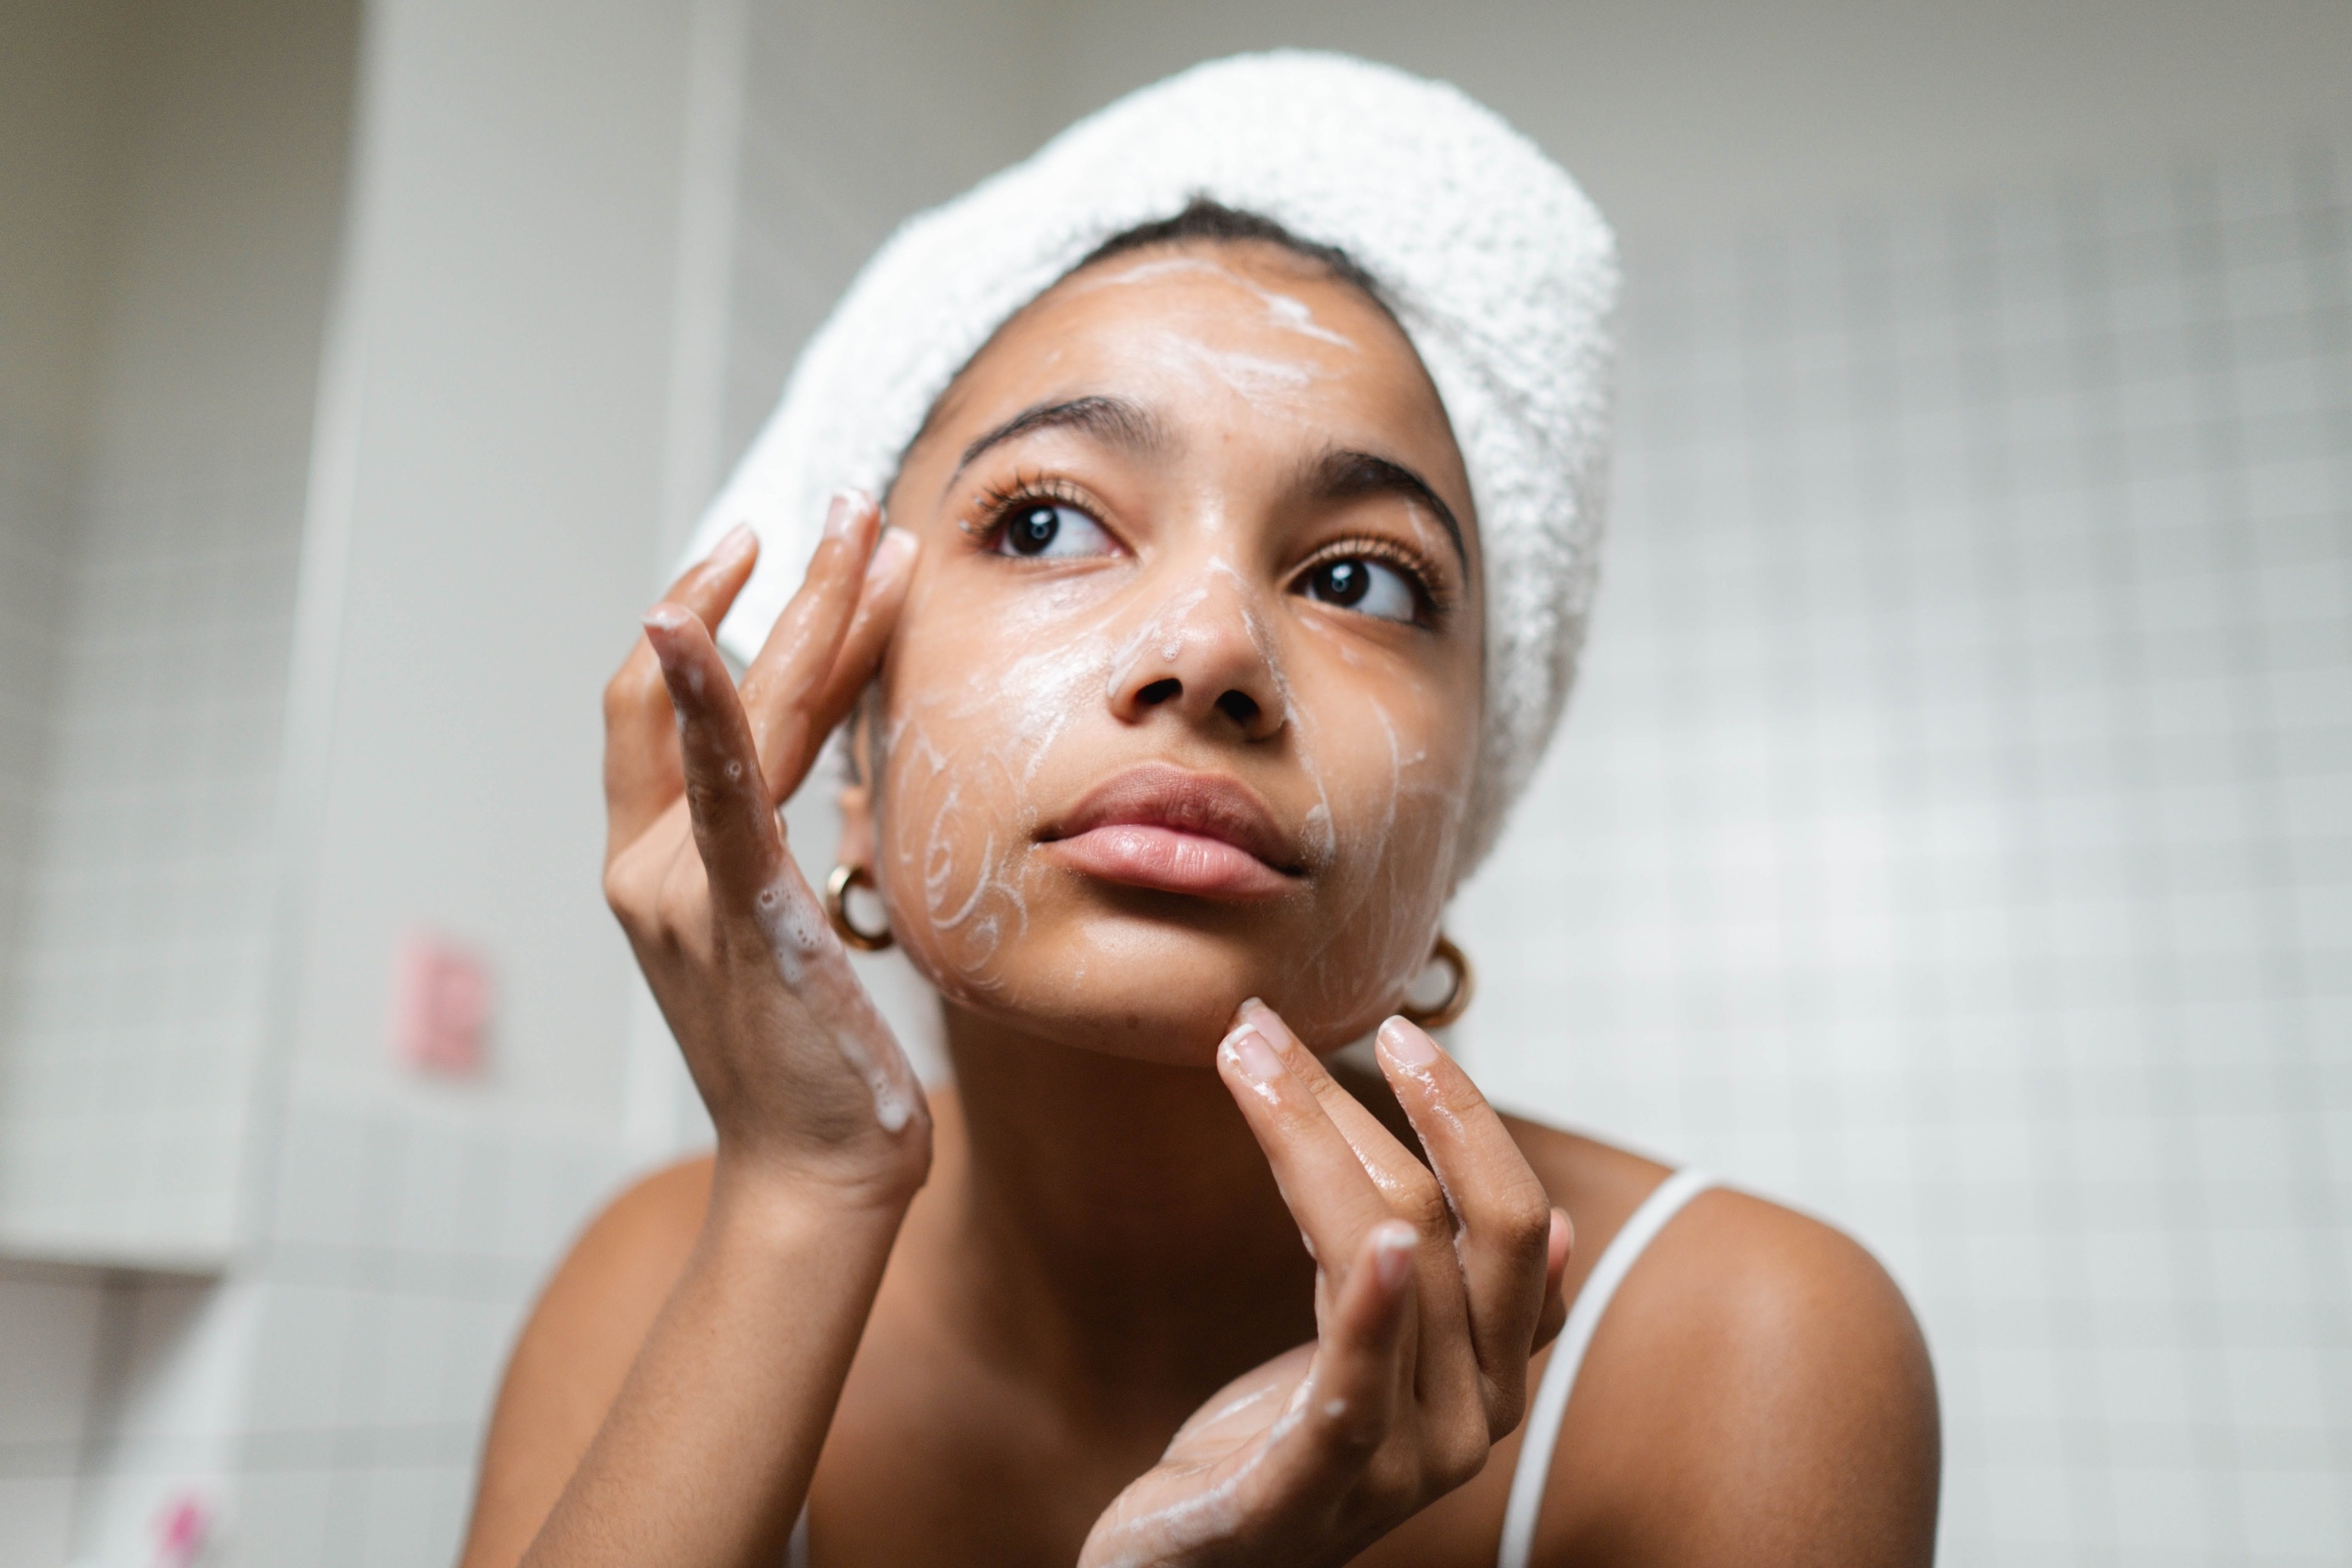 Beneficios del cepillo de limpieza facial en tu rutina diaria